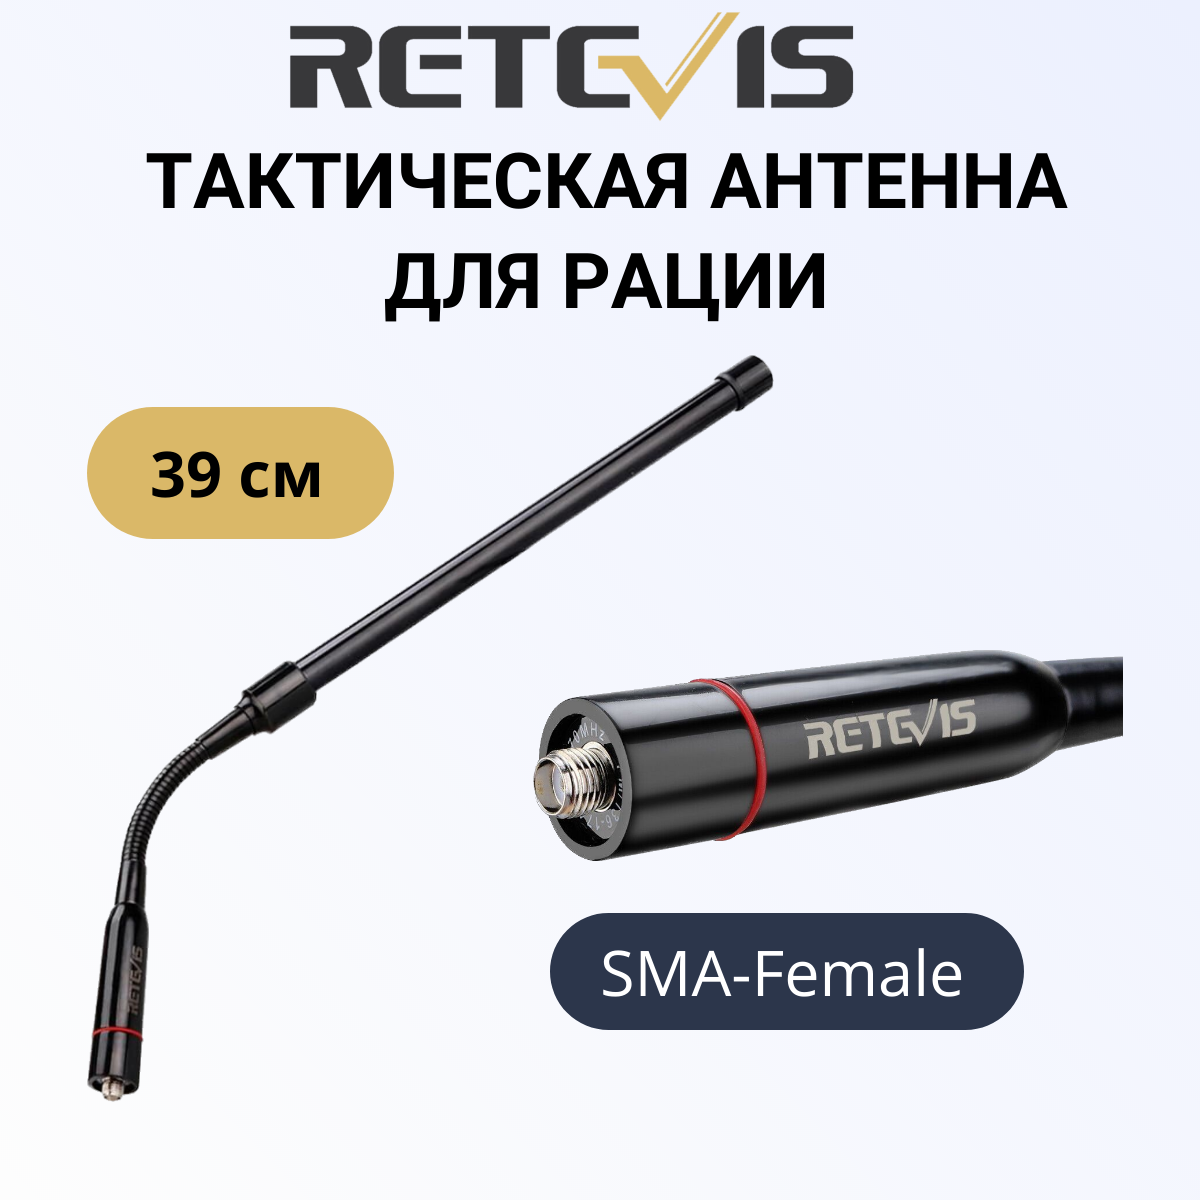 Тактическая антенна Retevis HA-03 (SMA - Female), 39cm, двухдиапазонная (VHF / UHF).